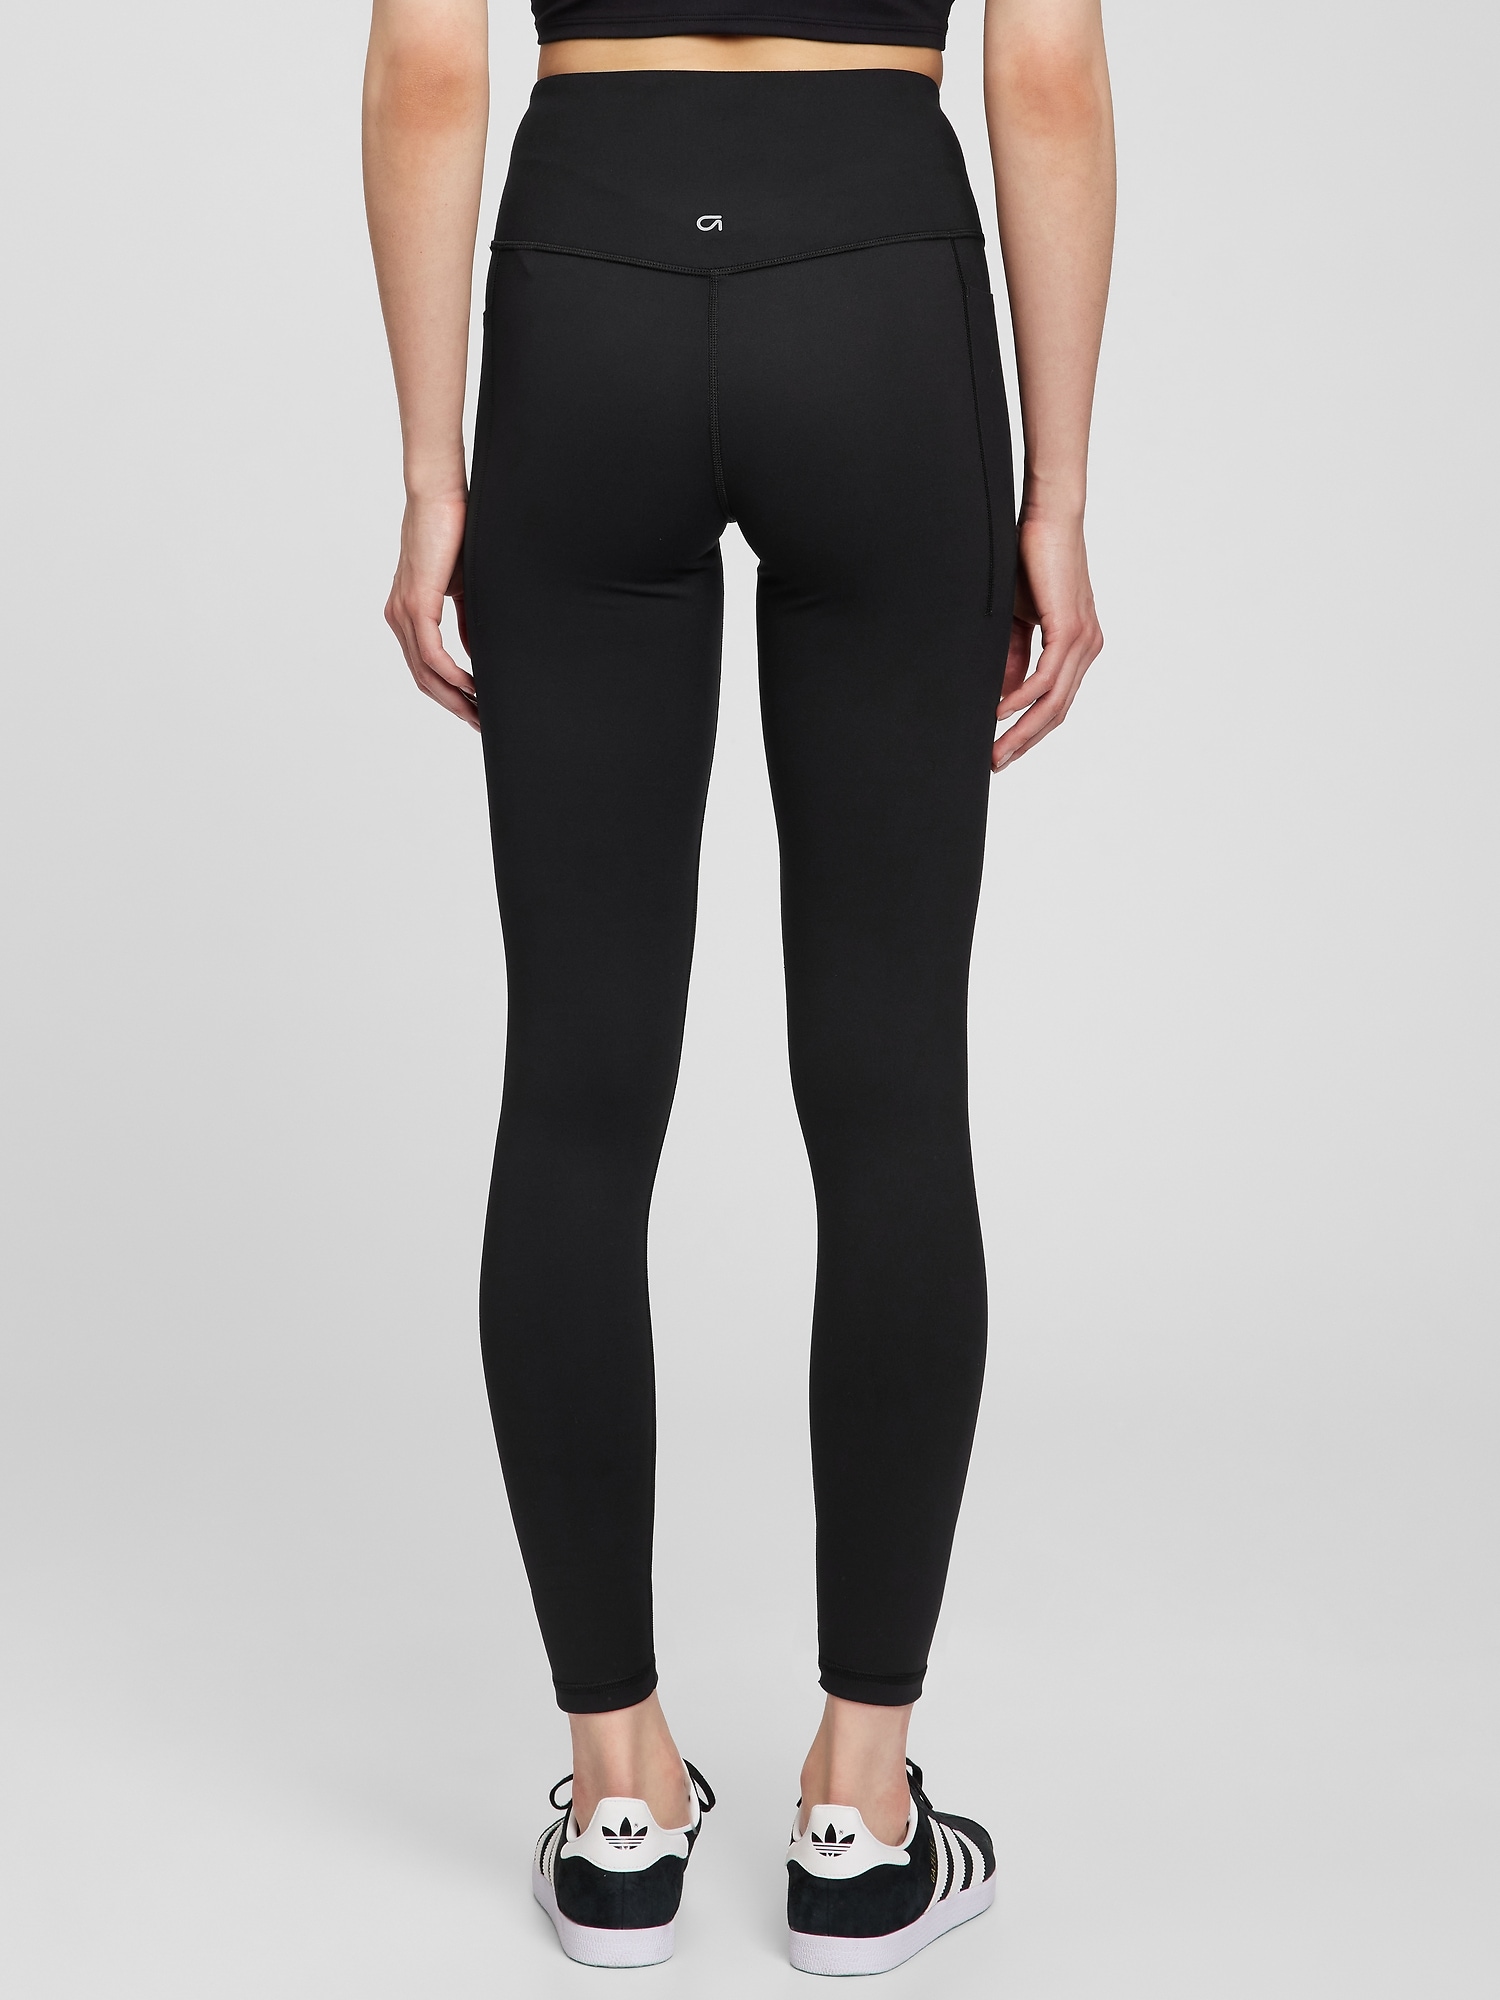 Gap Basic Fit Floral Athletic Leggings XL NWT  Basic fits, Clothes design,  Athletic leggings